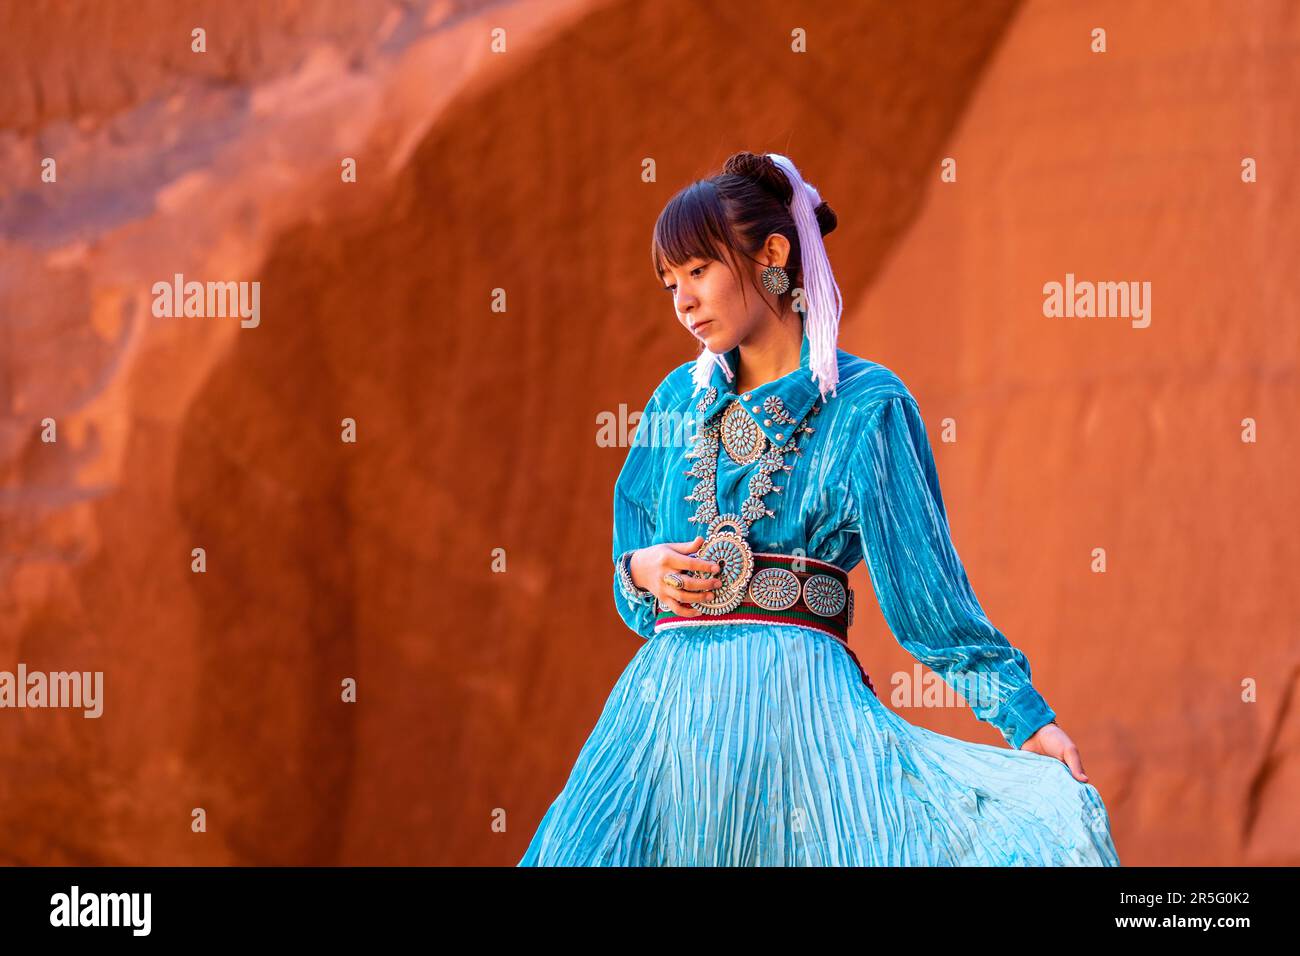 Giovane ragazza americana indiana Navajo al Big Hogan Arch nella Monument Valley Navajo Tribal Park, Arizona, Stati Uniti Foto Stock